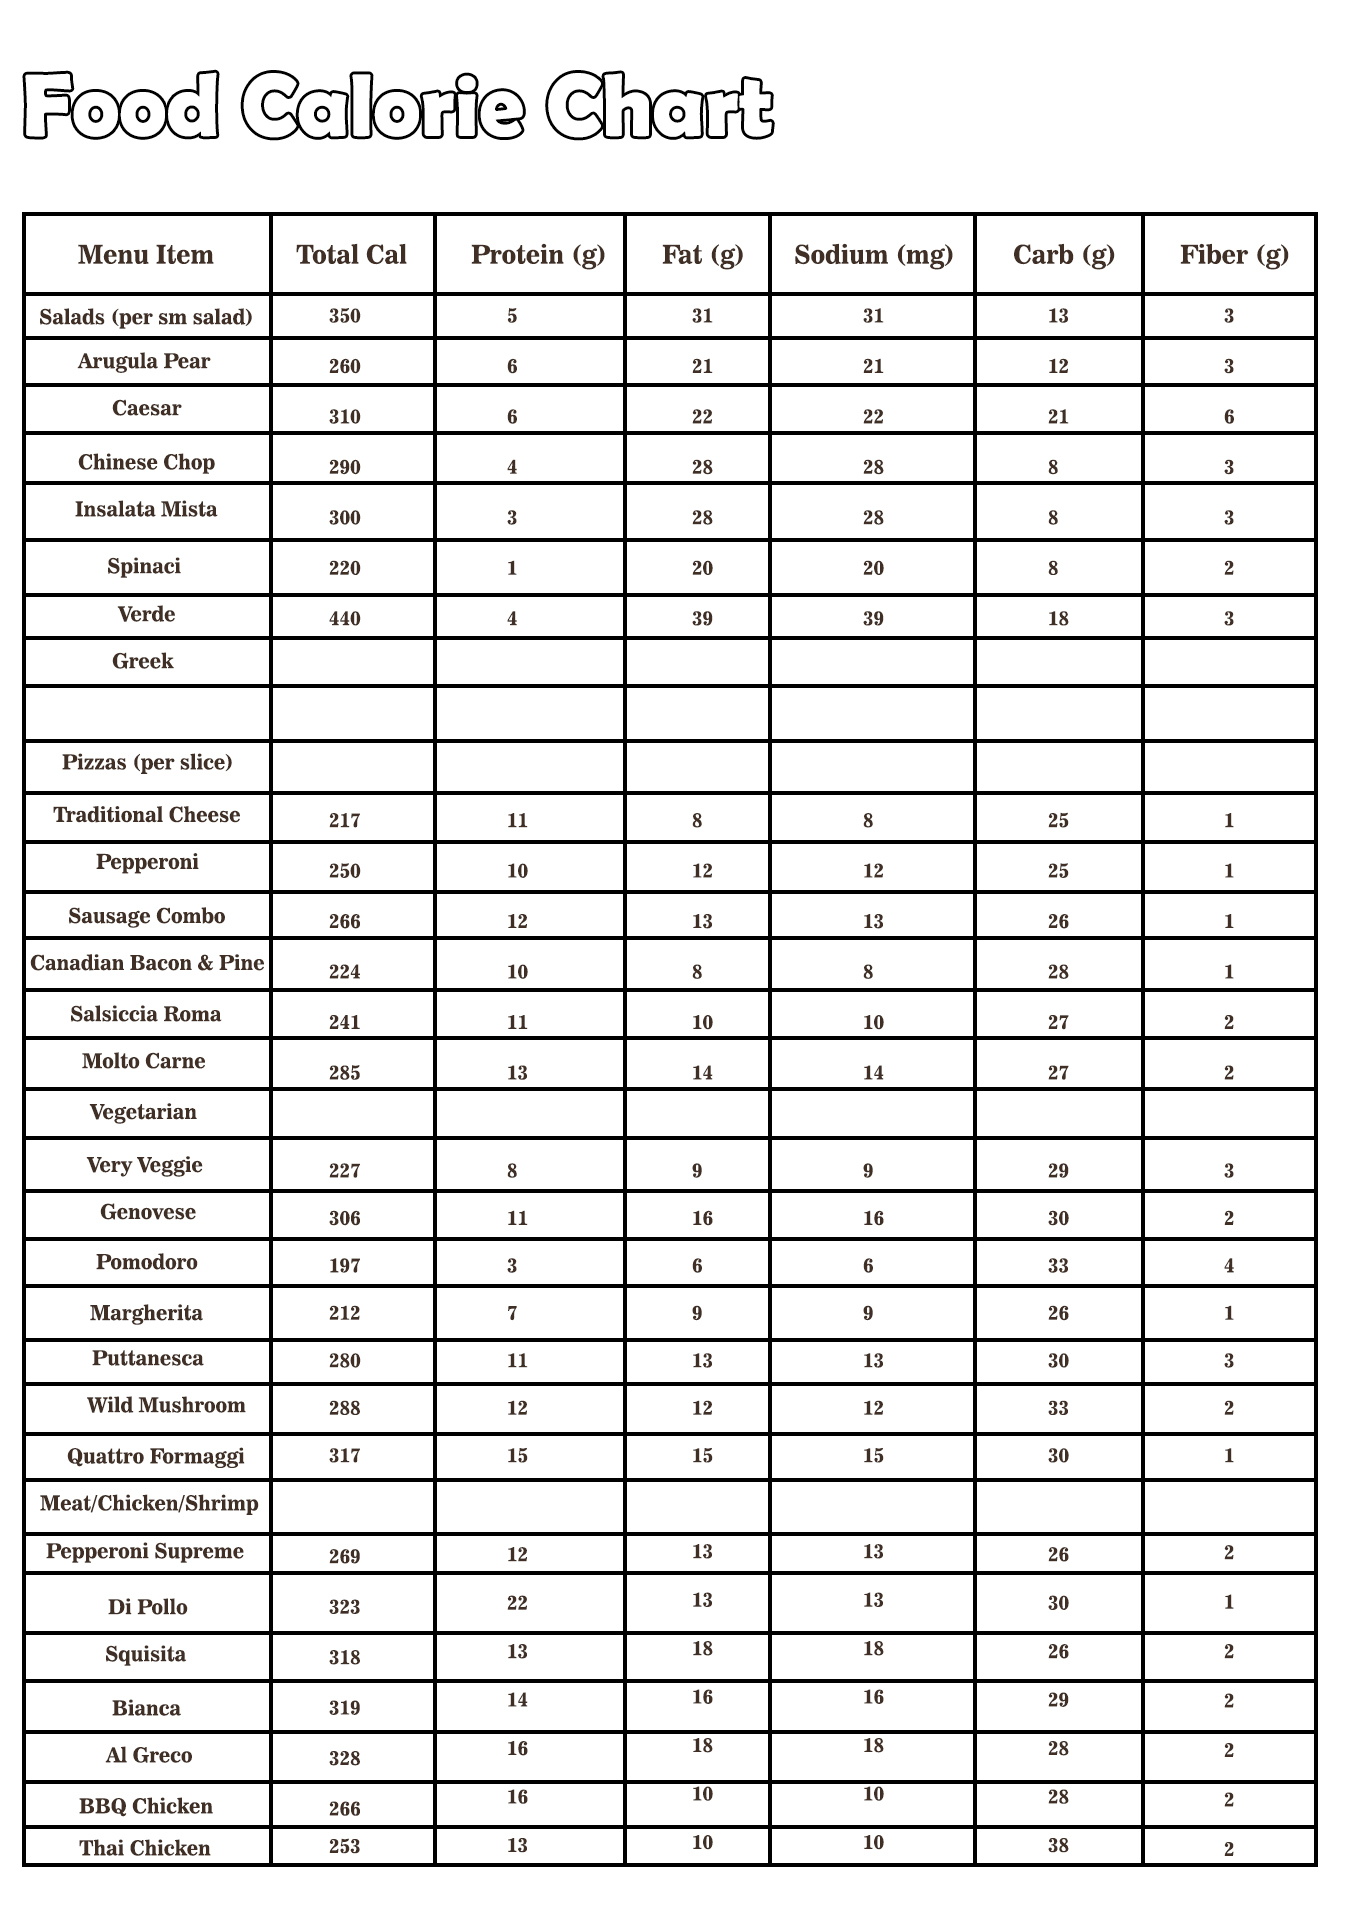 Printable Food Calorie Counter Chart